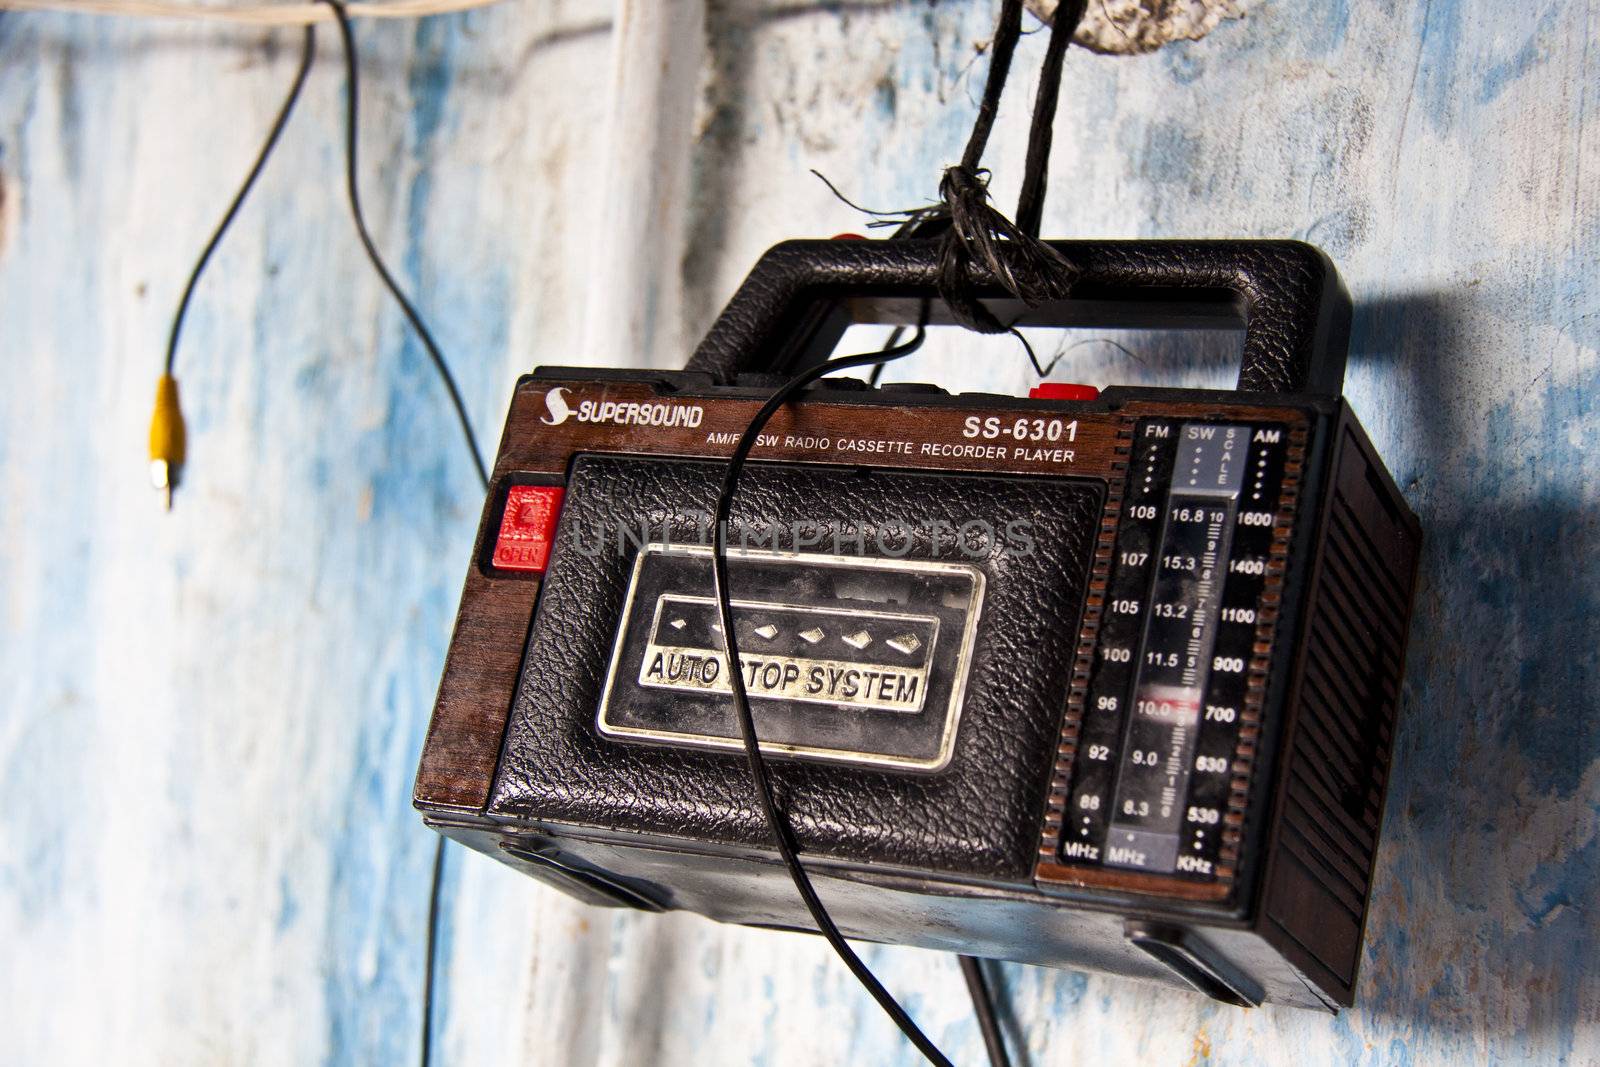 Retro cassette player by kasto